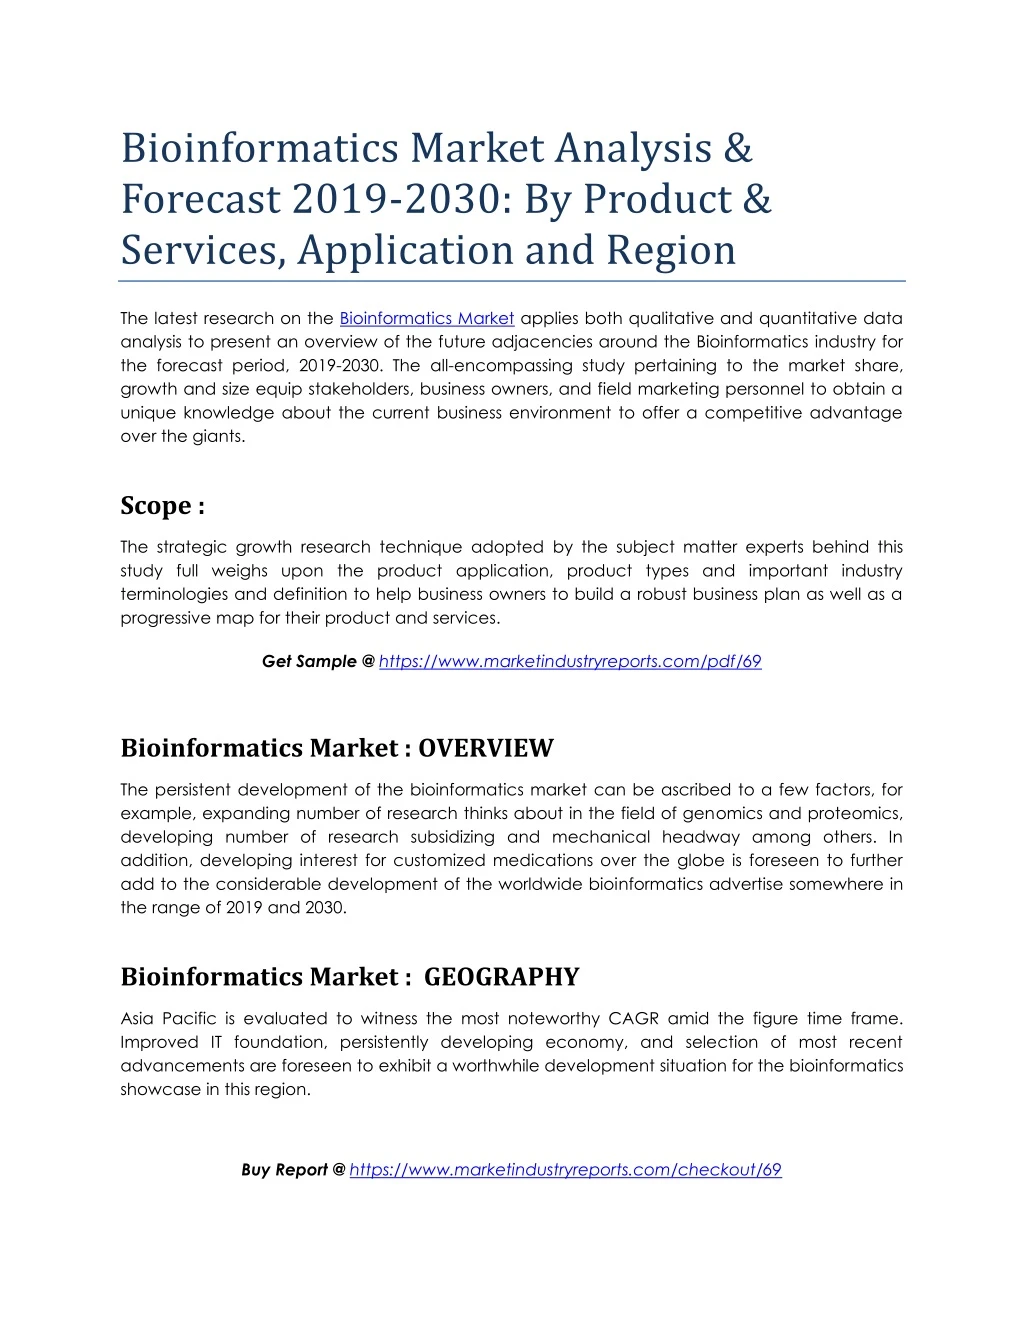 bioinformatics market analysis forecast 2019 2030